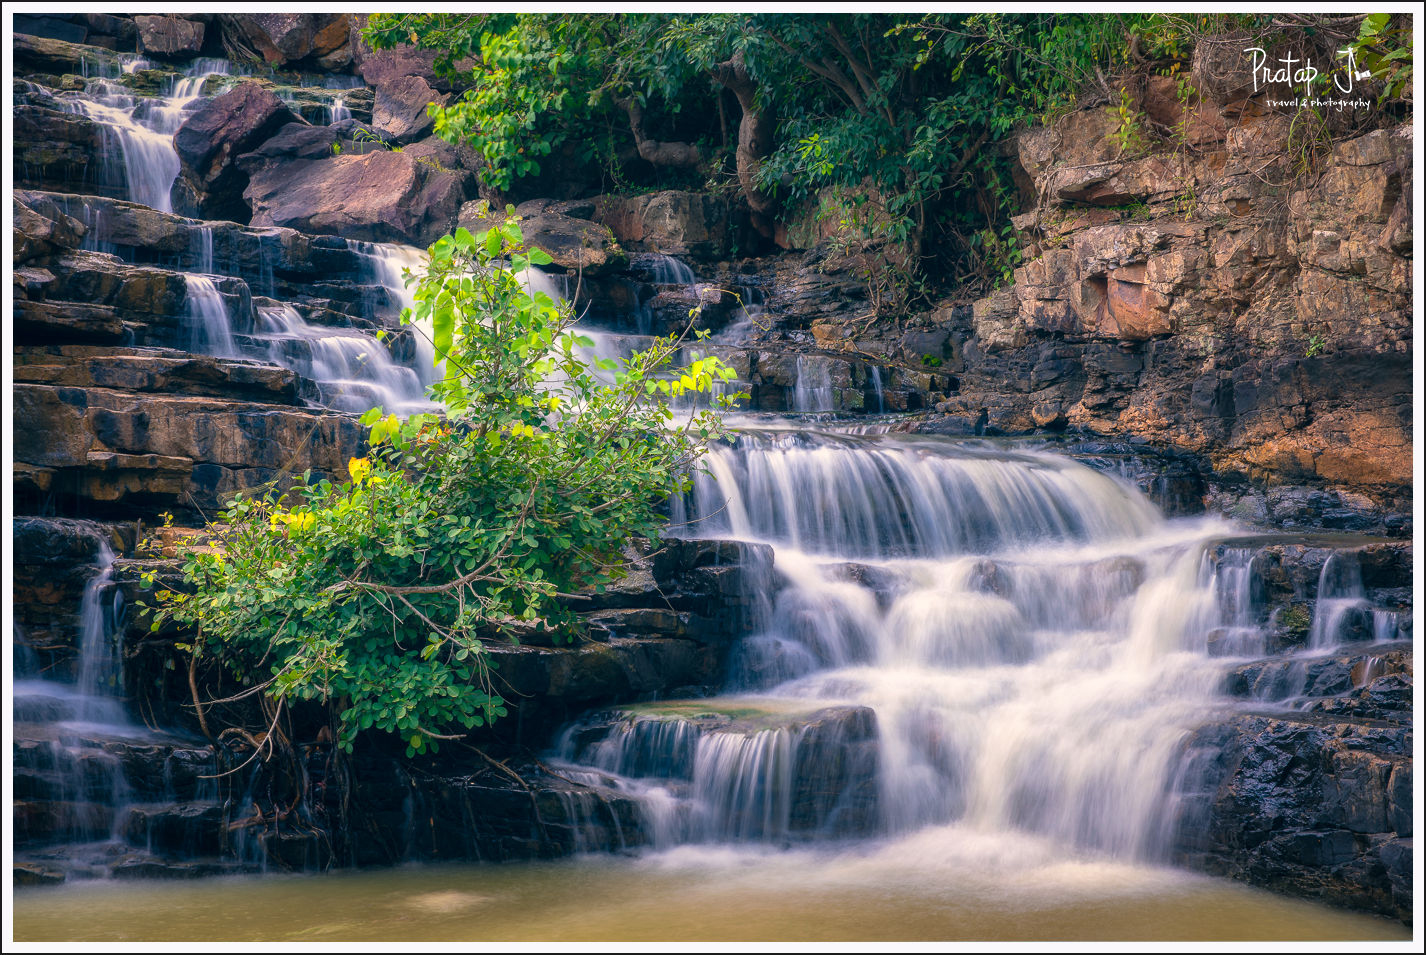 Chitradhara Waterfall in October